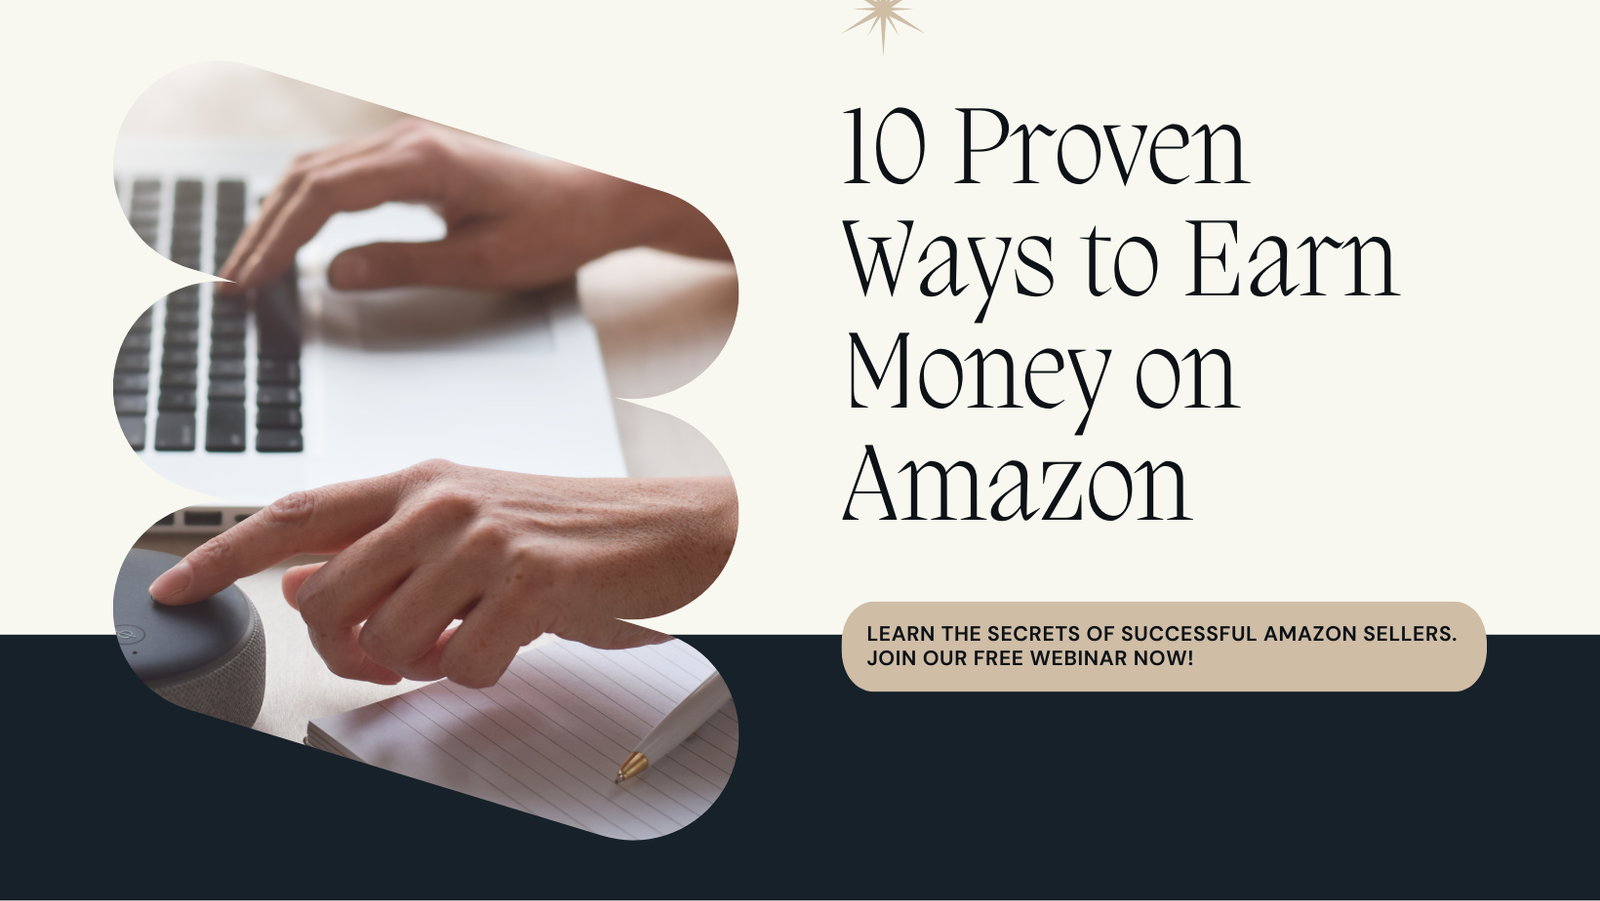 10 Proven Ways to Earn Money on Amazon